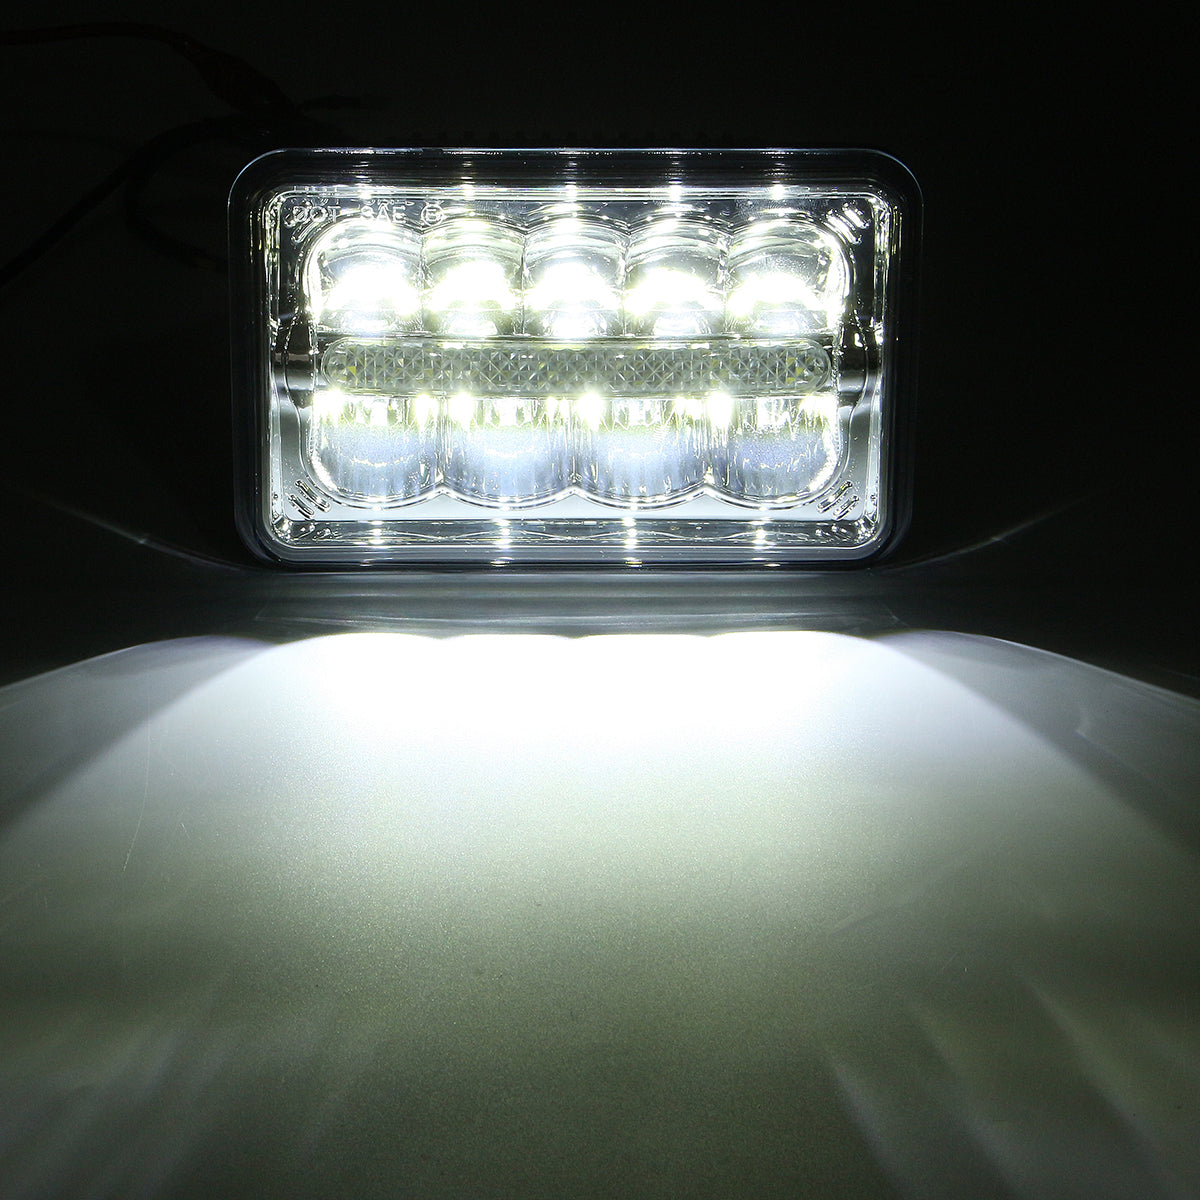 1Pcs 4X6 Inch H4 20W LED Headlights Lamp White W/DRL Hi/Lo Beam for Truck Pickup Trailer